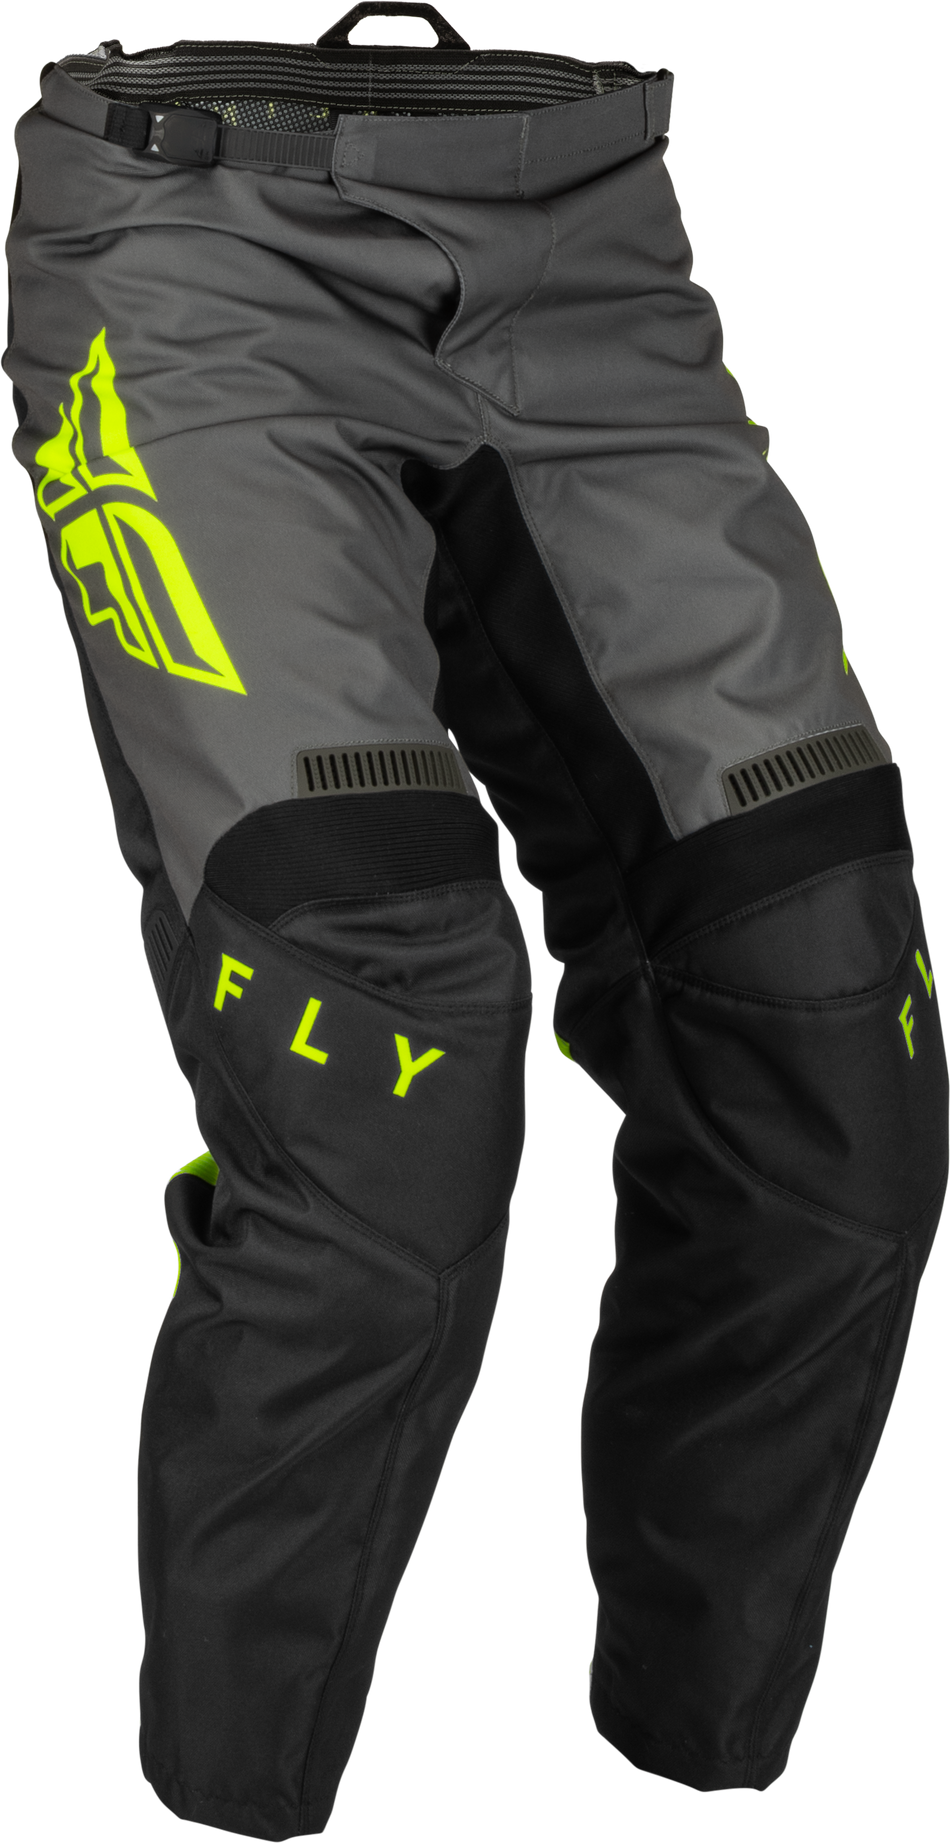 FLY RACING F-16 Pants Black/Grey/Hi-Vis Sz 28 376-93028